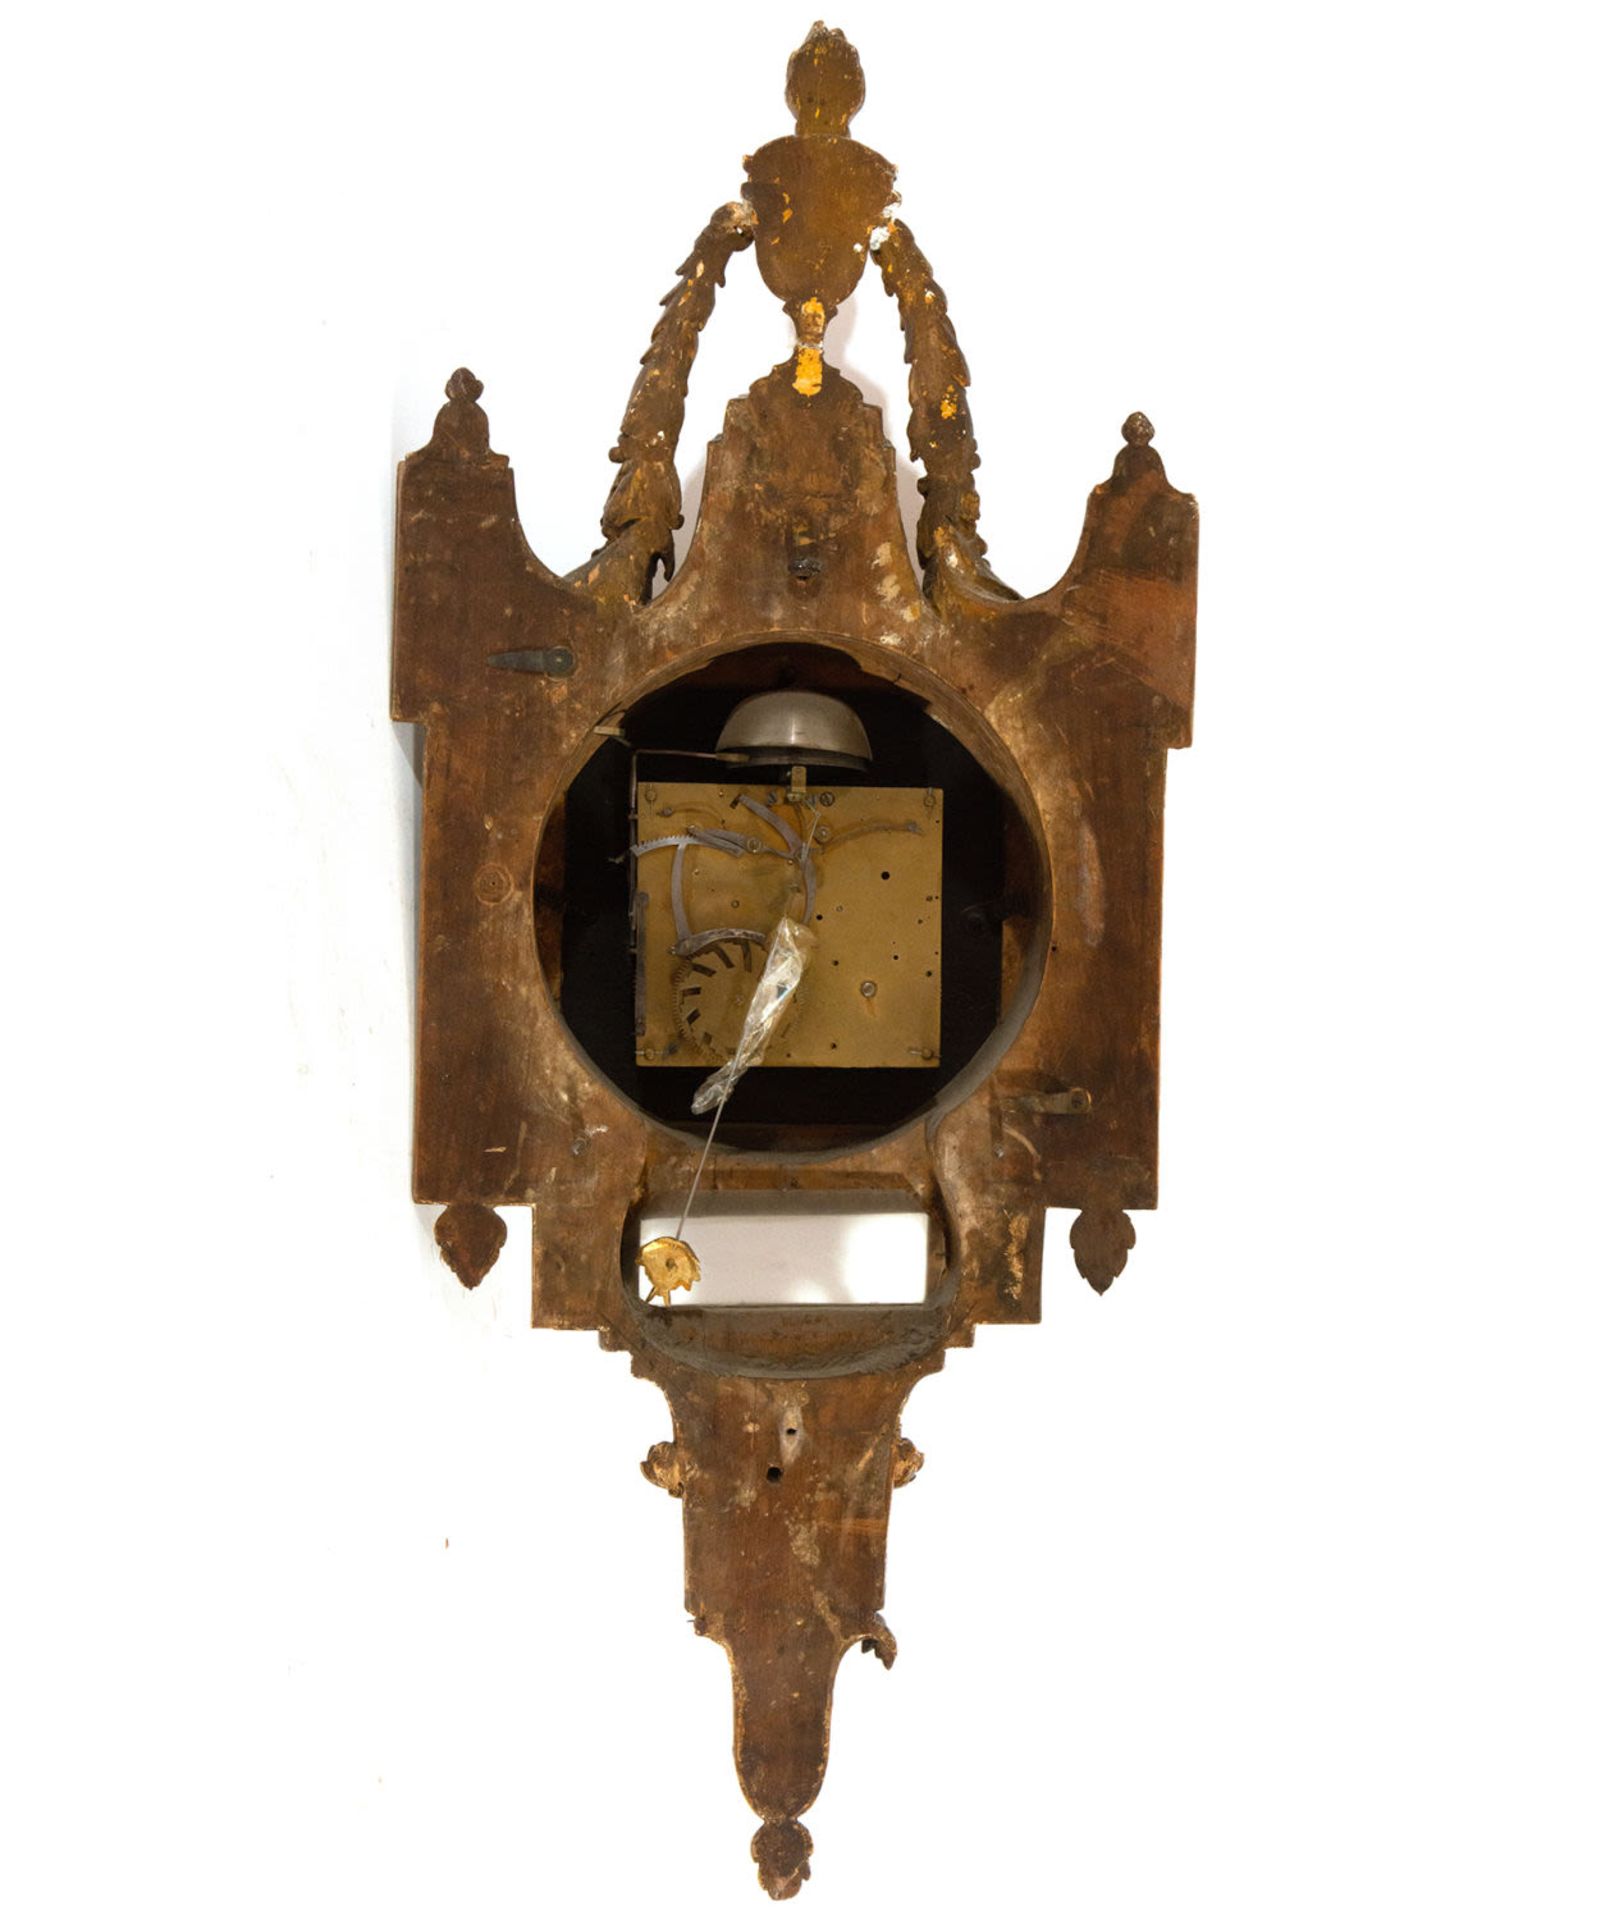 Cartel Fluoger a Soleur clock, Swiss Louis XVI style, circa 1780, 18th century - Image 5 of 7